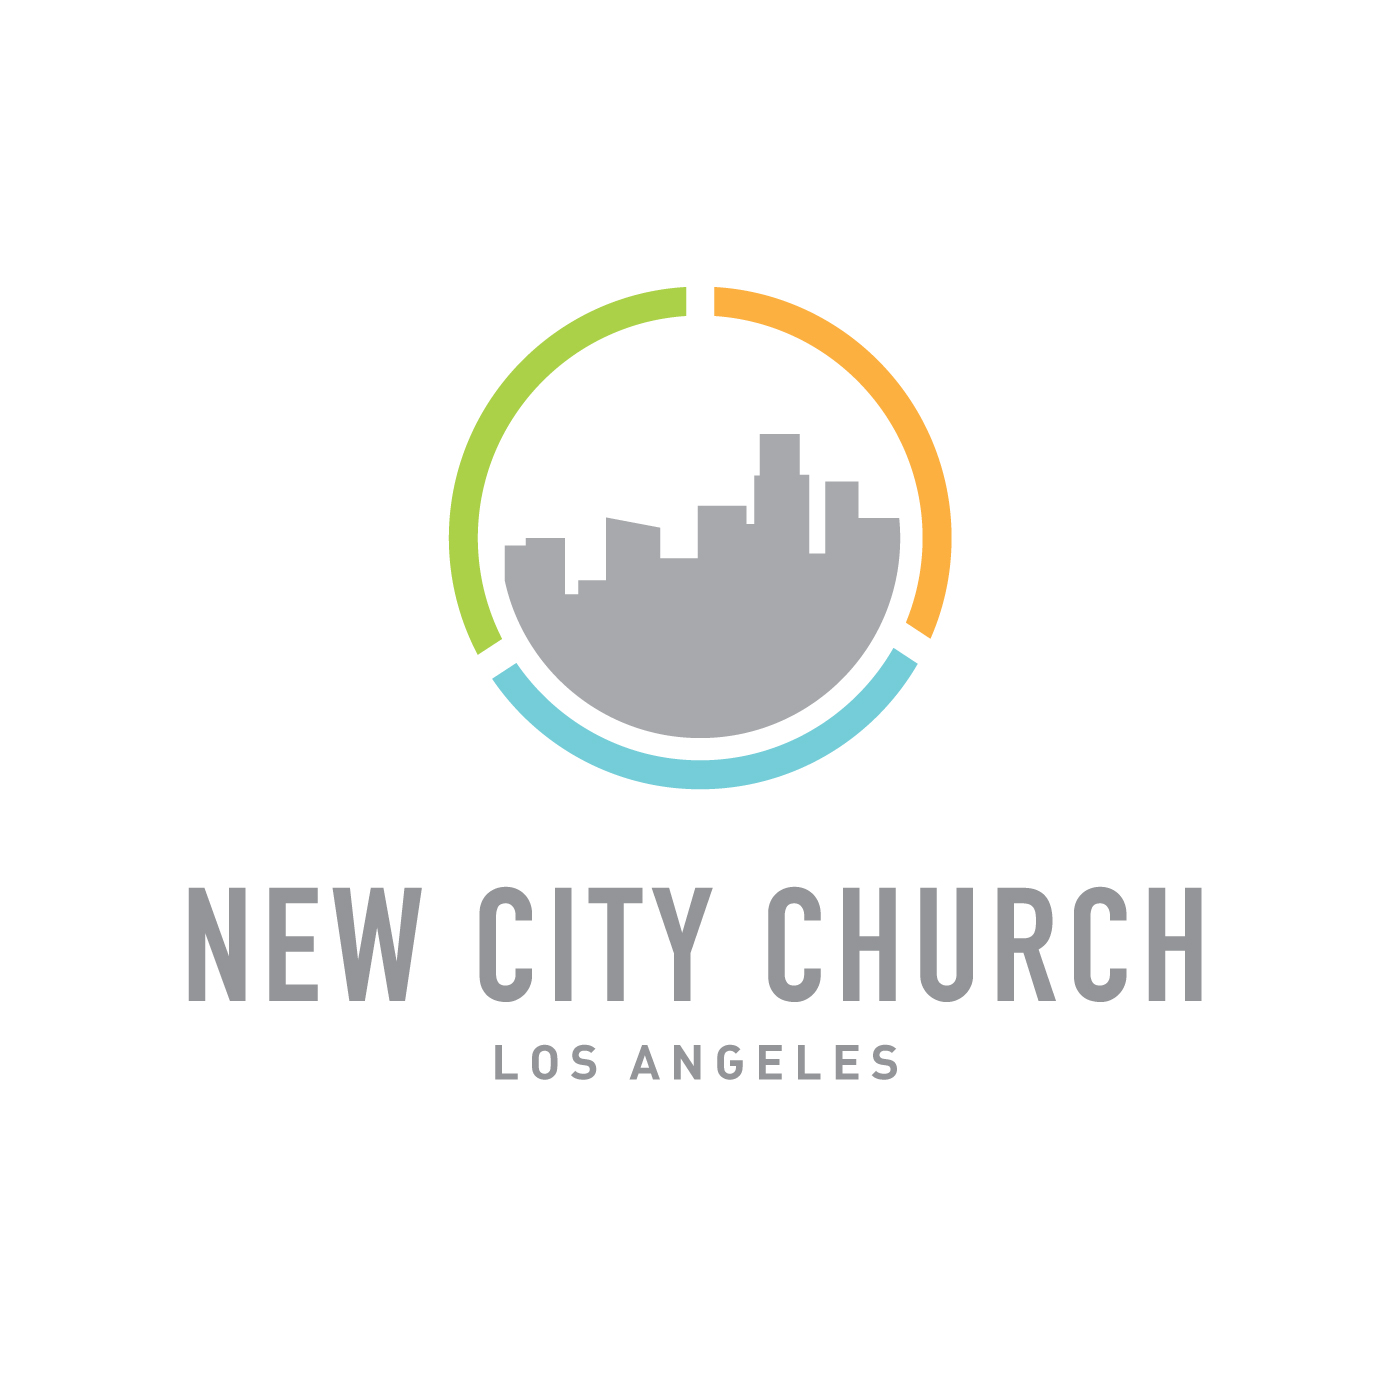 New City Church of Los Angeles